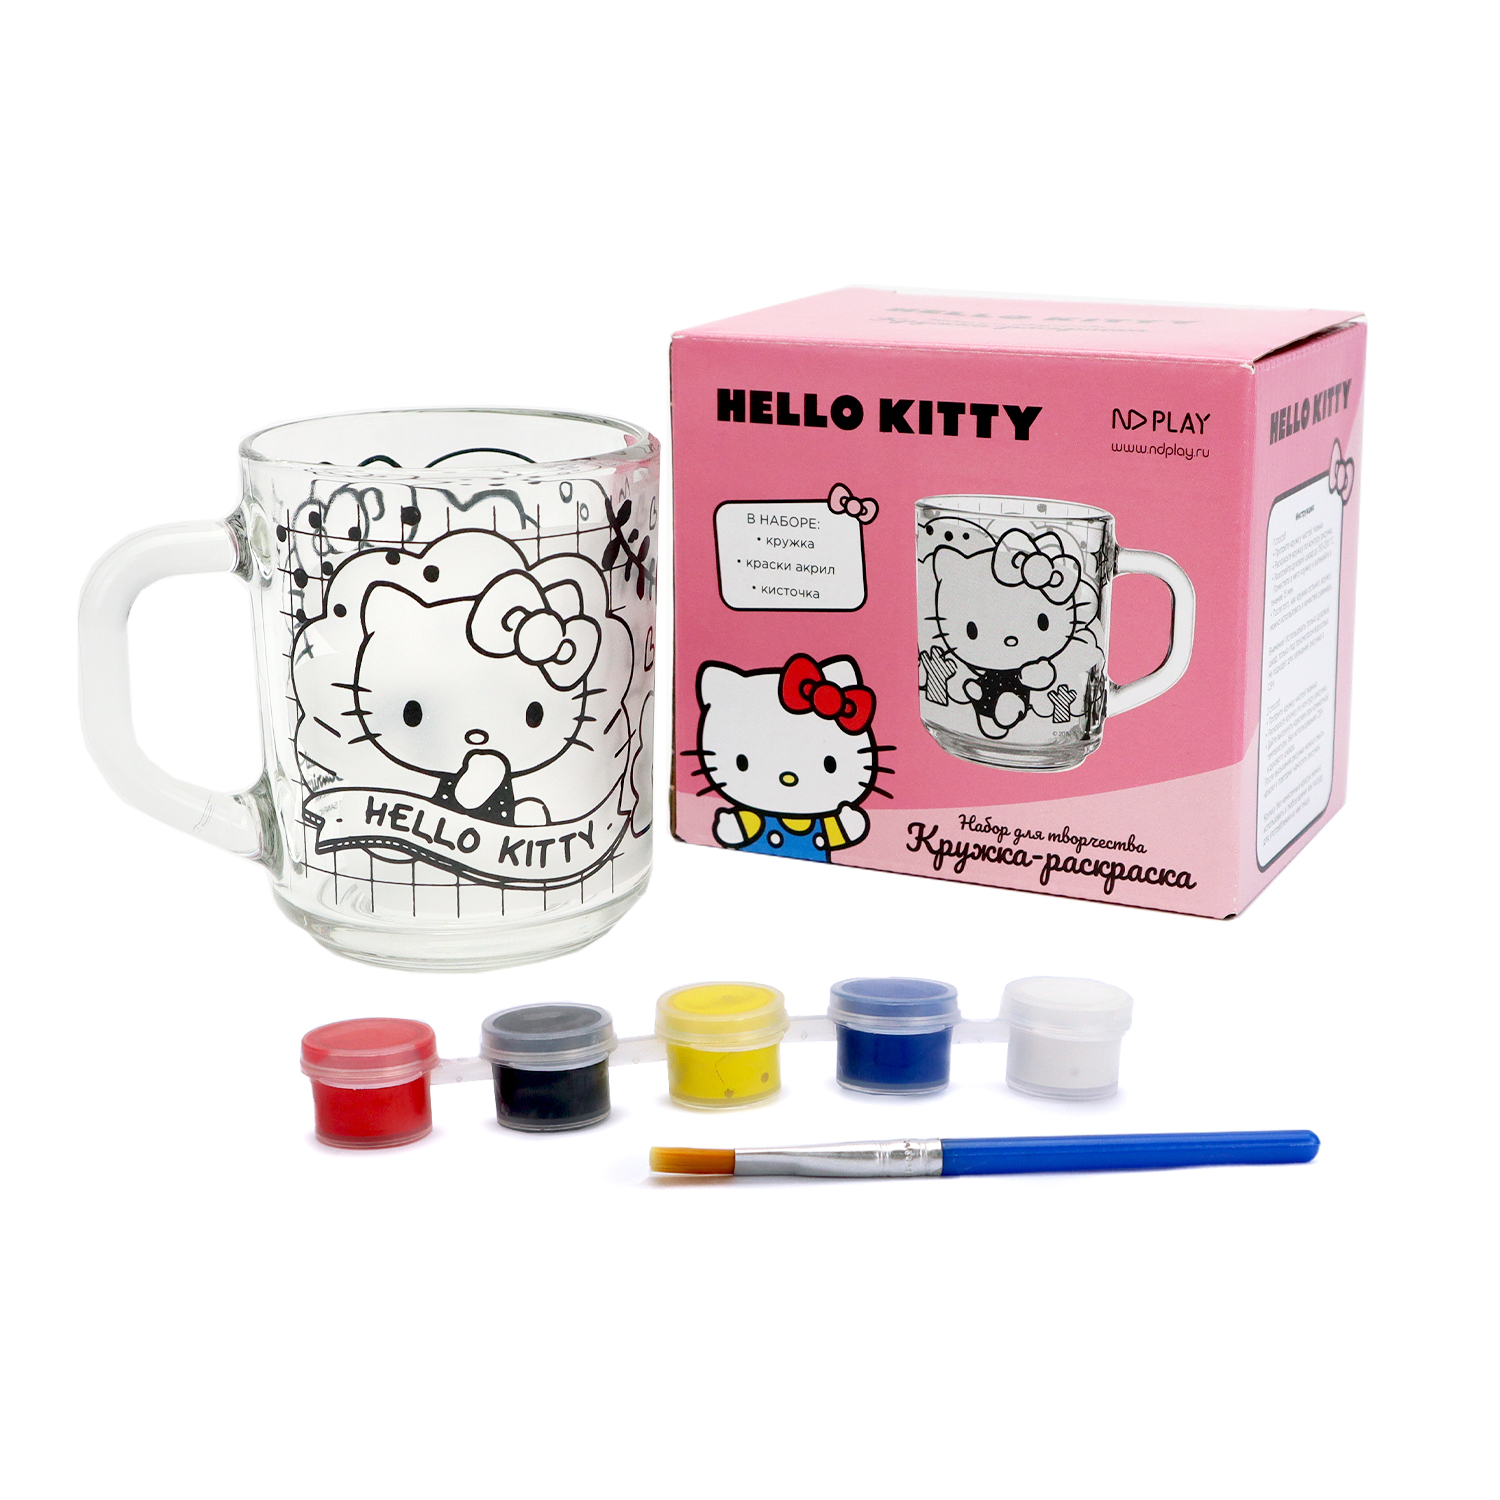 Кружка для раскрашивания ND Play Hello Kitty 311168 с красками и кисточкой, 230 мл стекло